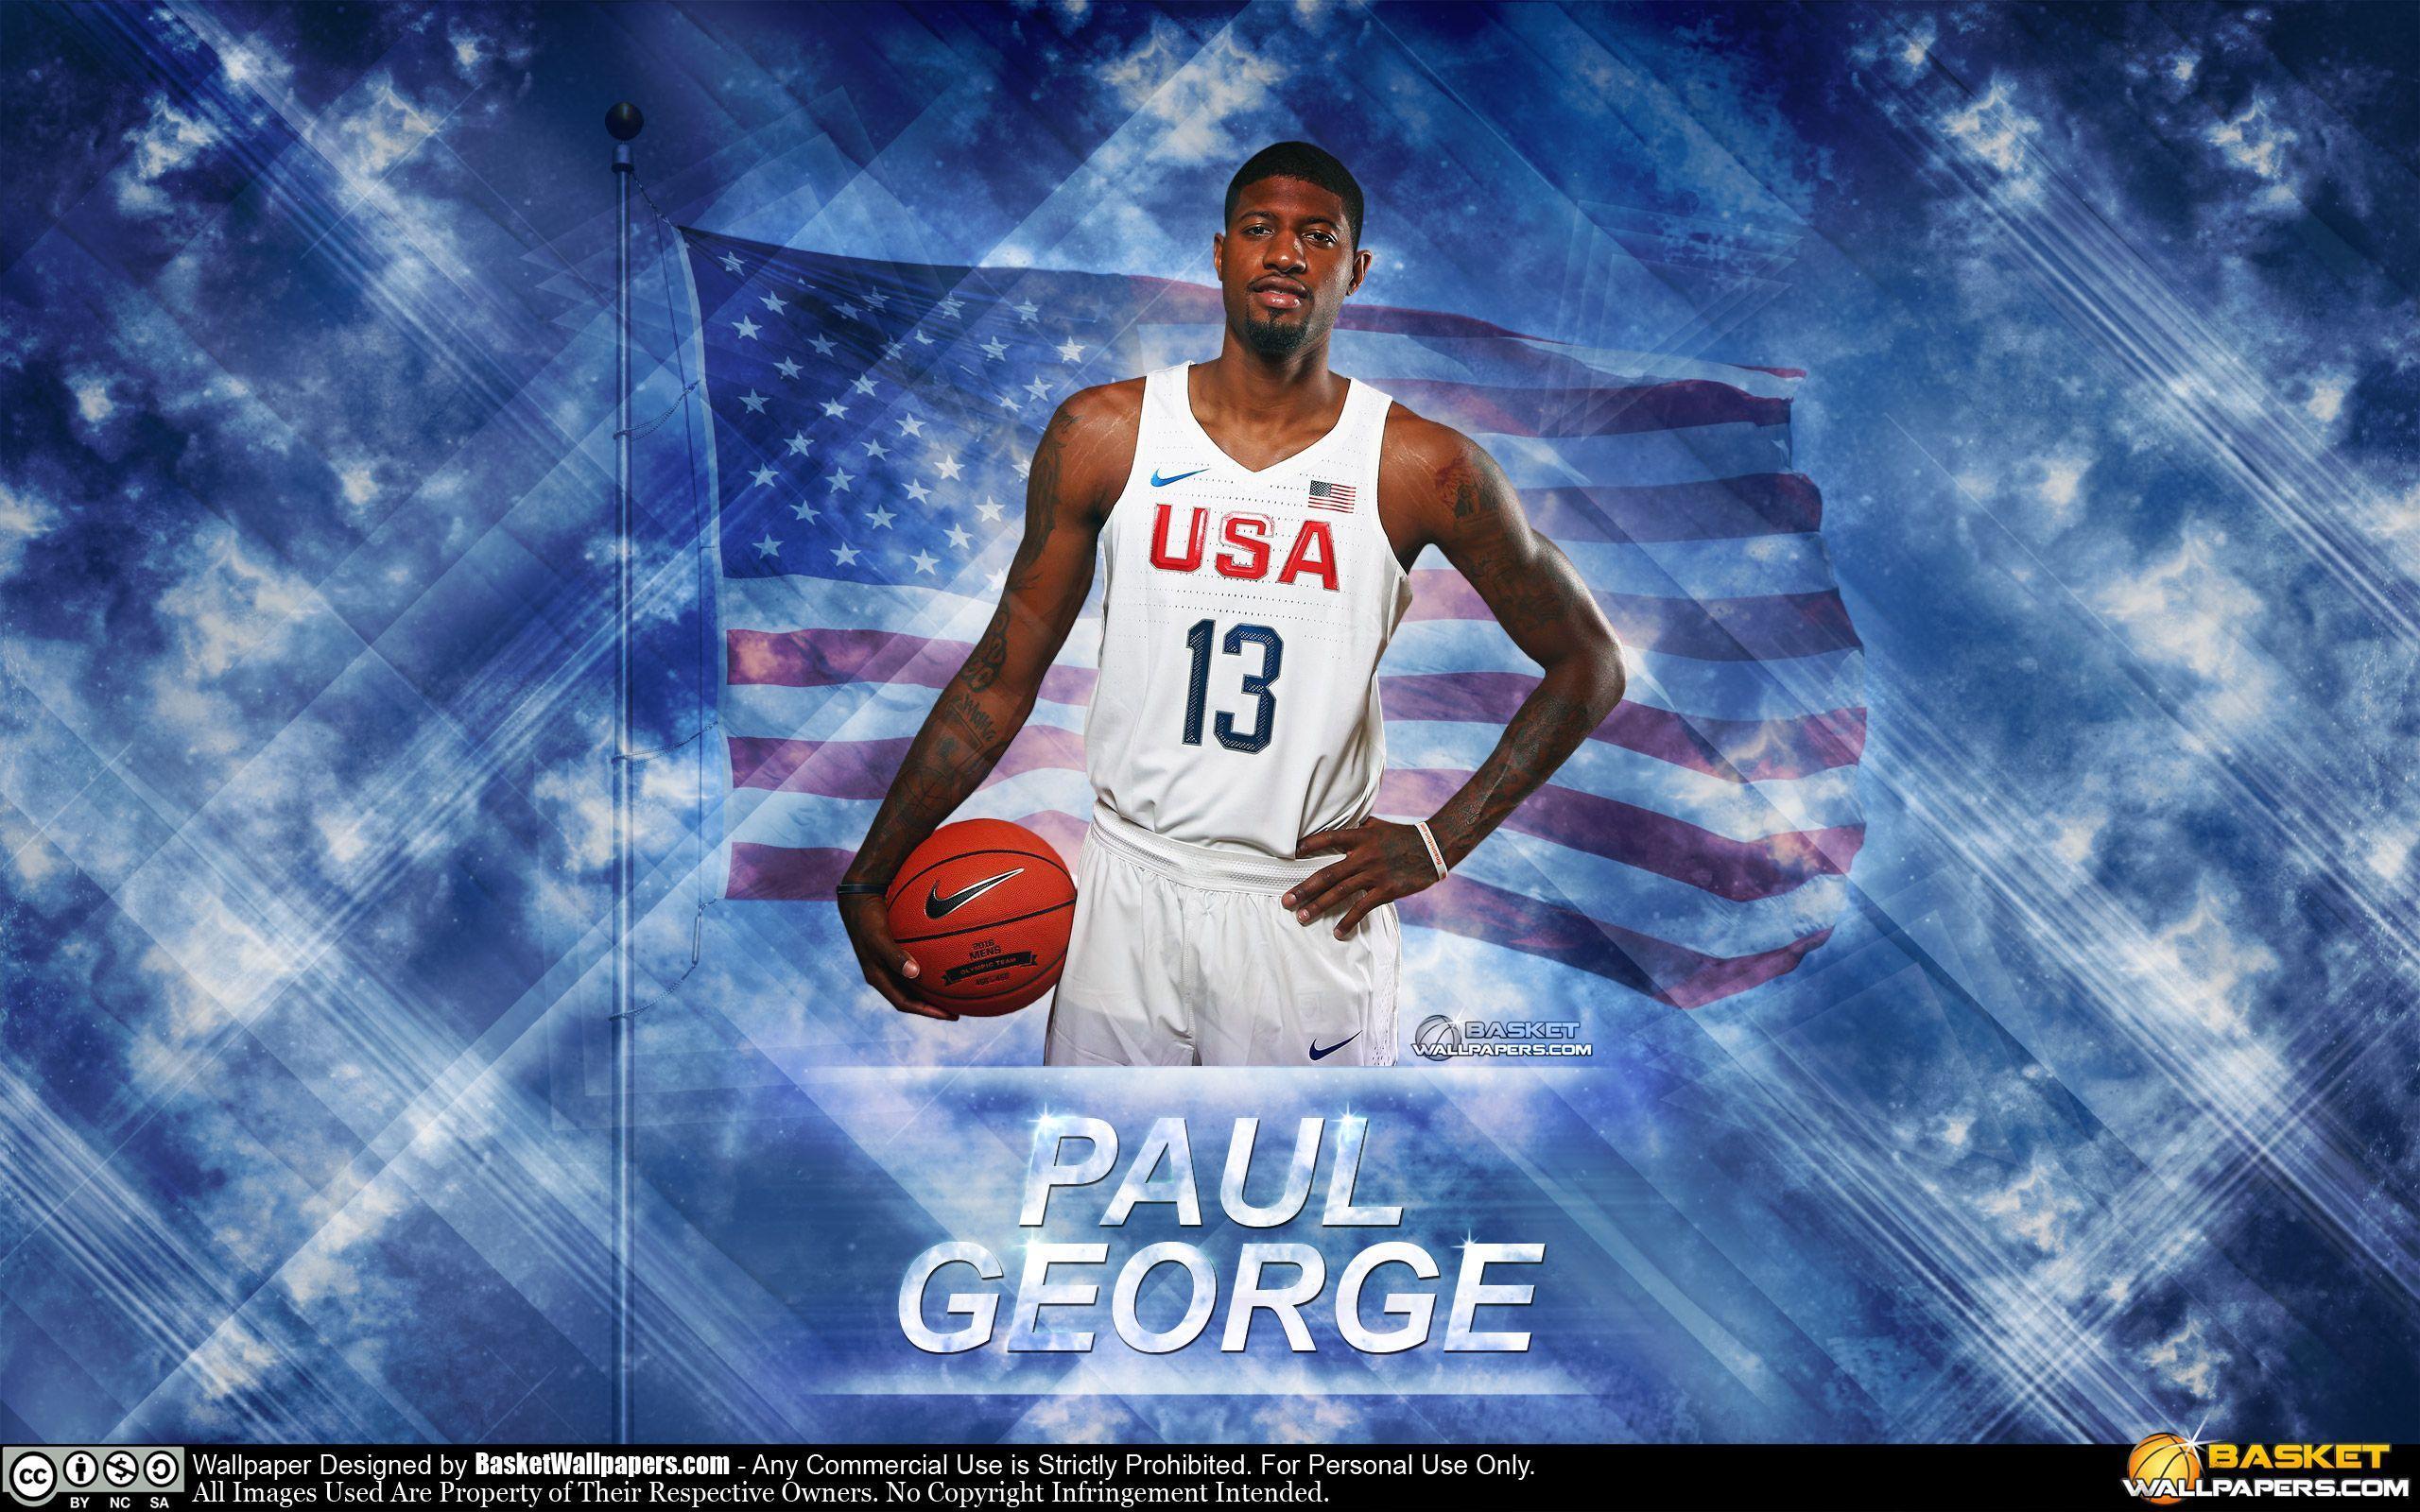 Paul George USA 2016 Olympics Wallpaper. Basketball Wallpaper at